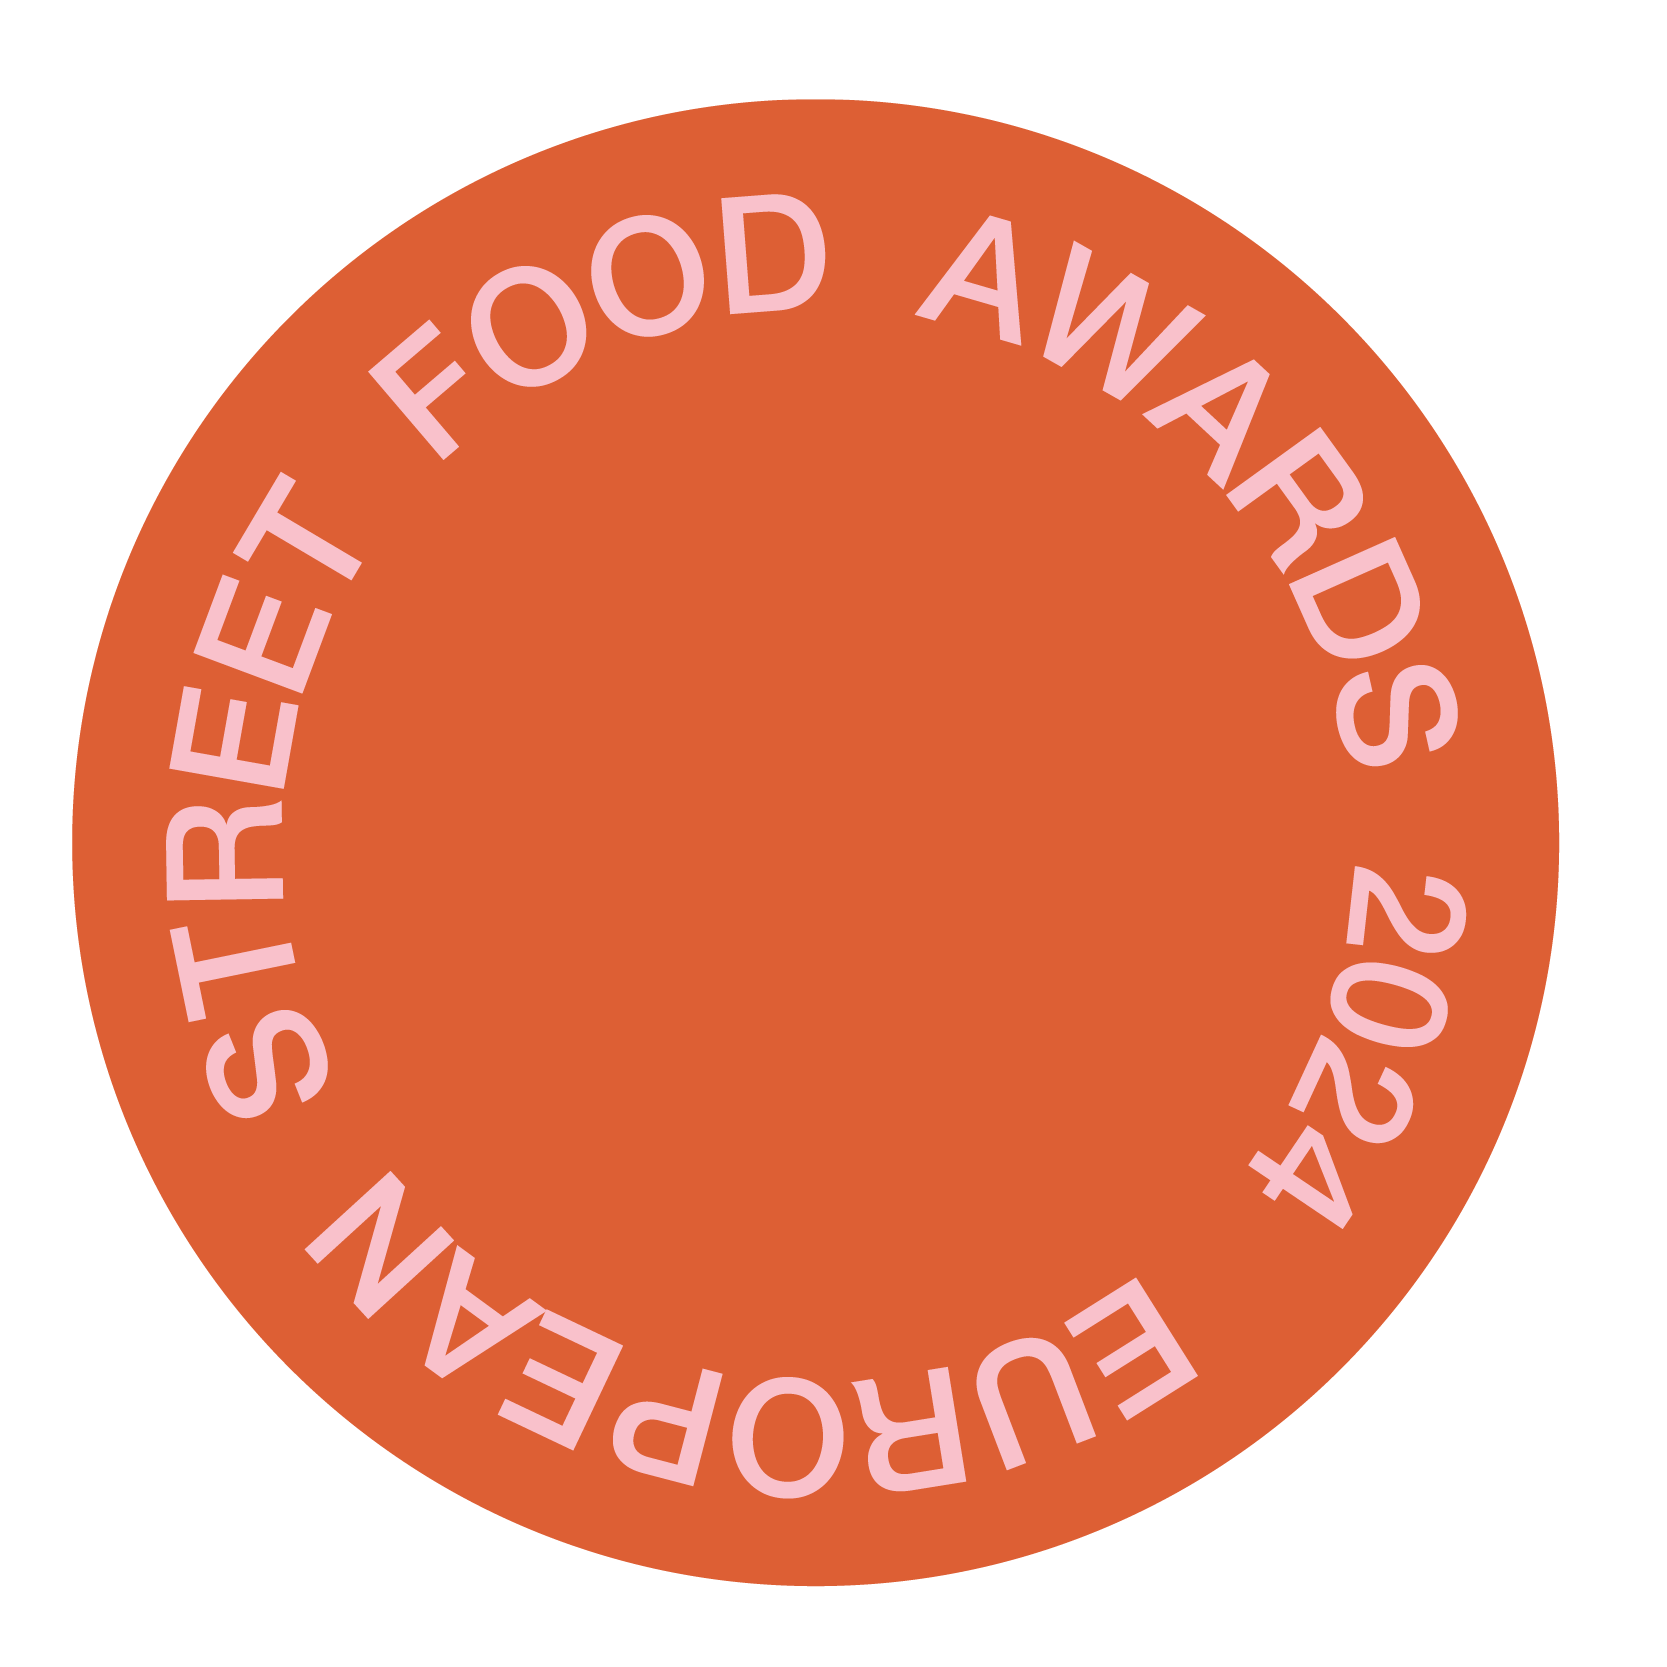 European Street Food Award at Reffen